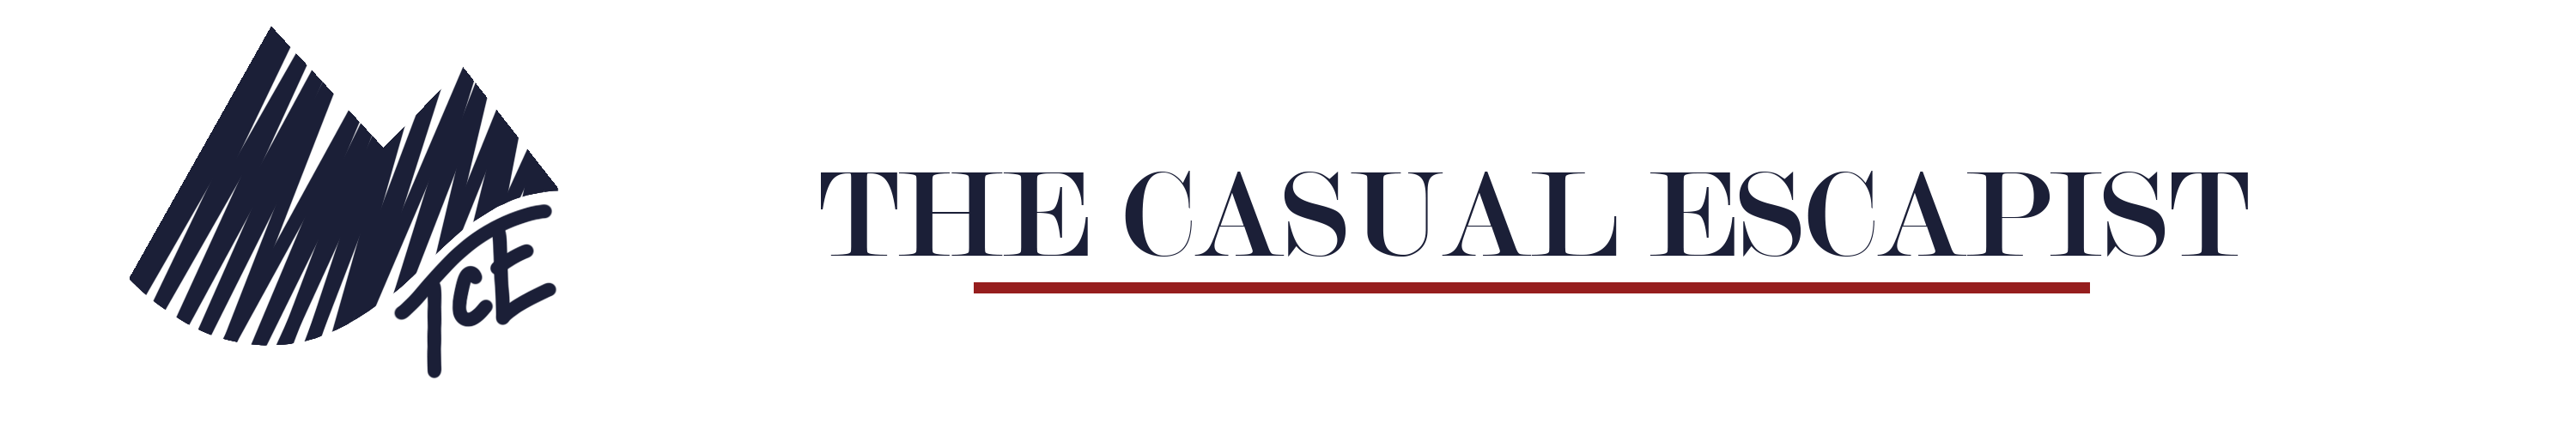 Escaptist Logo - The Casual Escapist's Artist Shop. Featuring Custom T Shirts